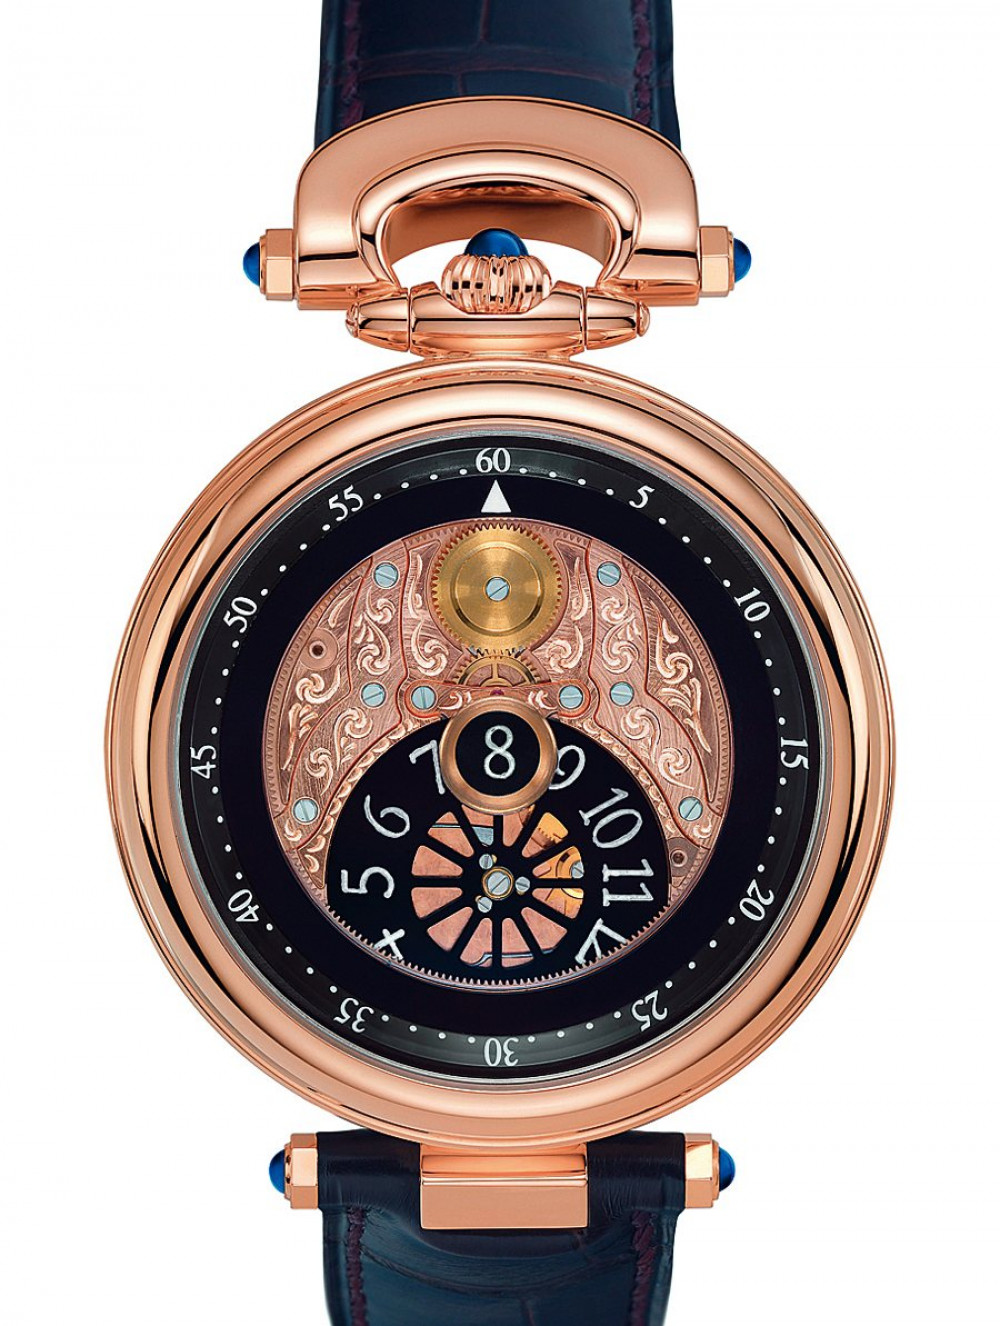 Zegarek firmy Bovet 1822, model Complications JH - Jumping Hour